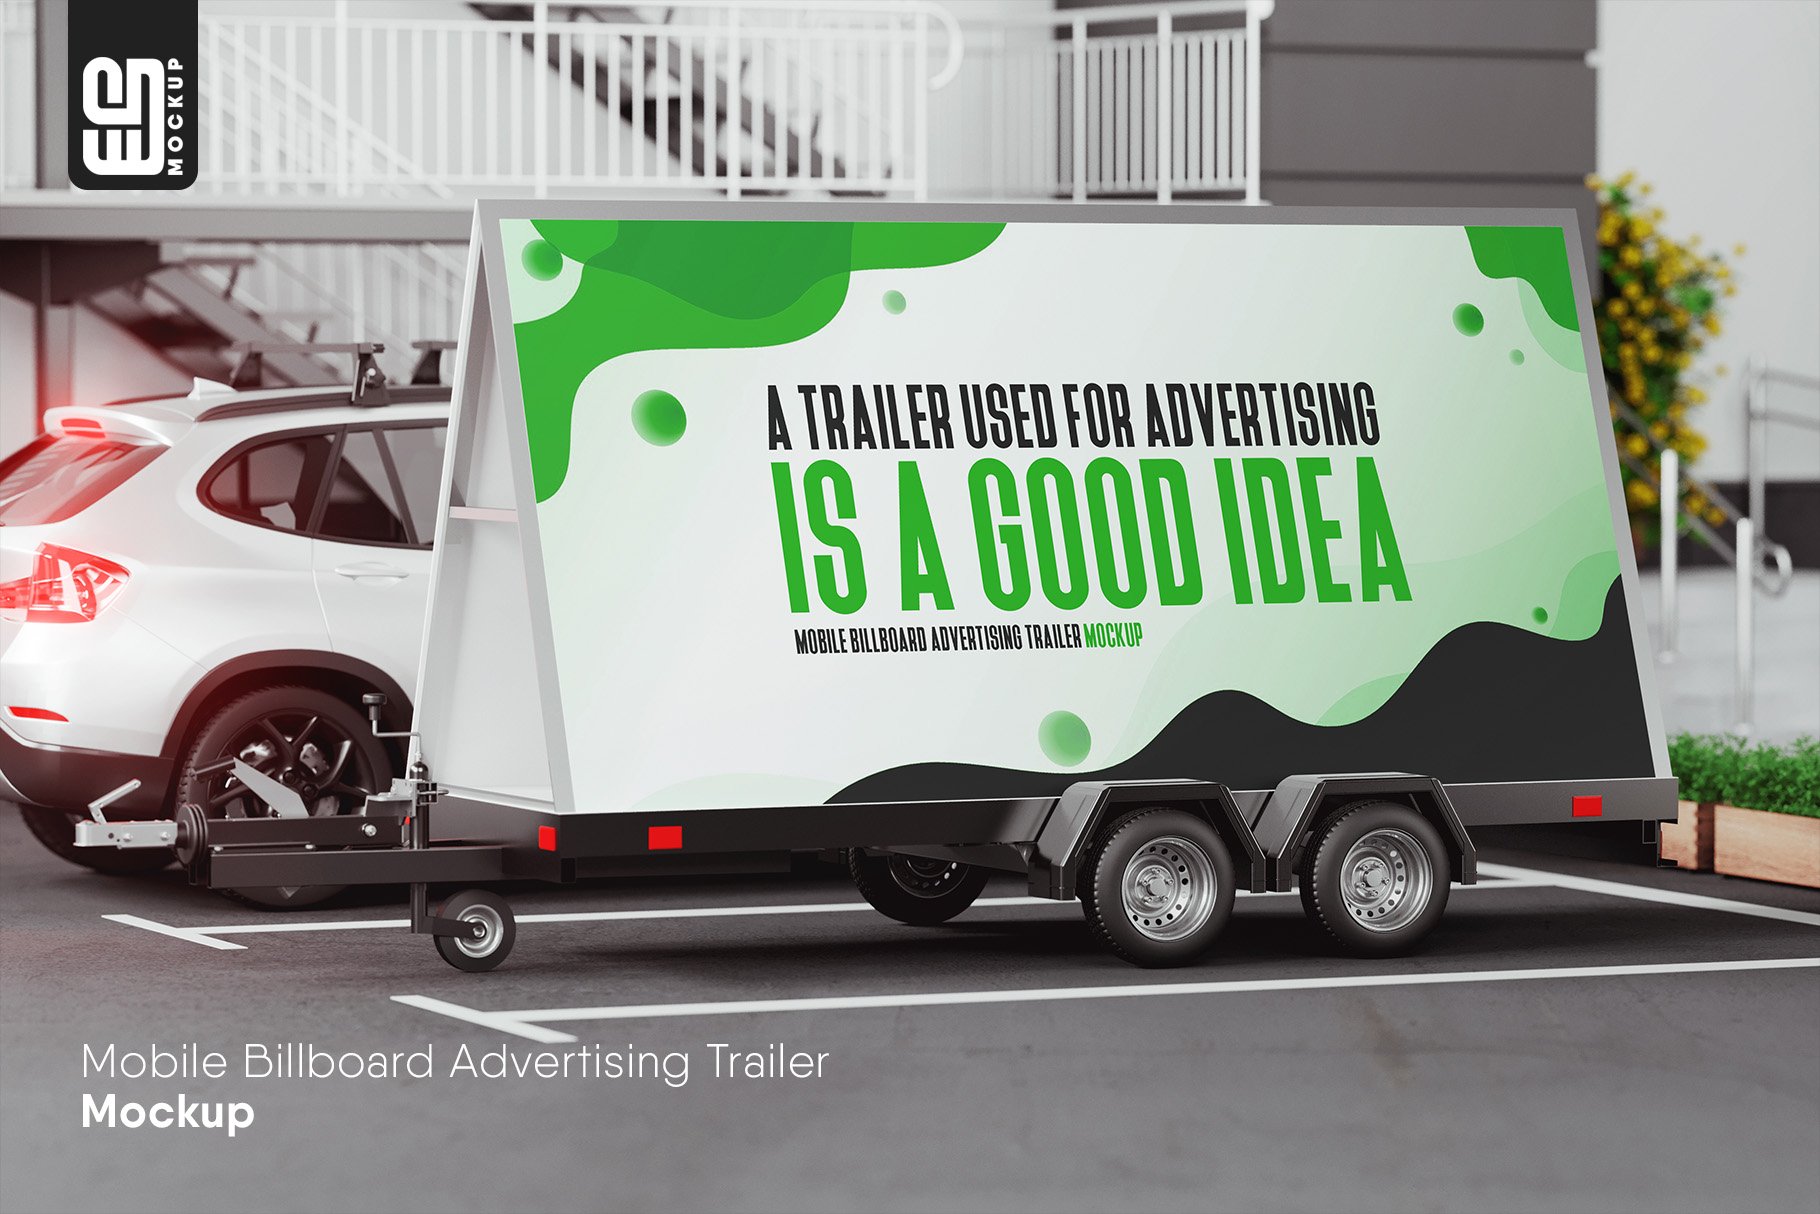 Mobile Billboard Adv Trailer Mockup cover image.